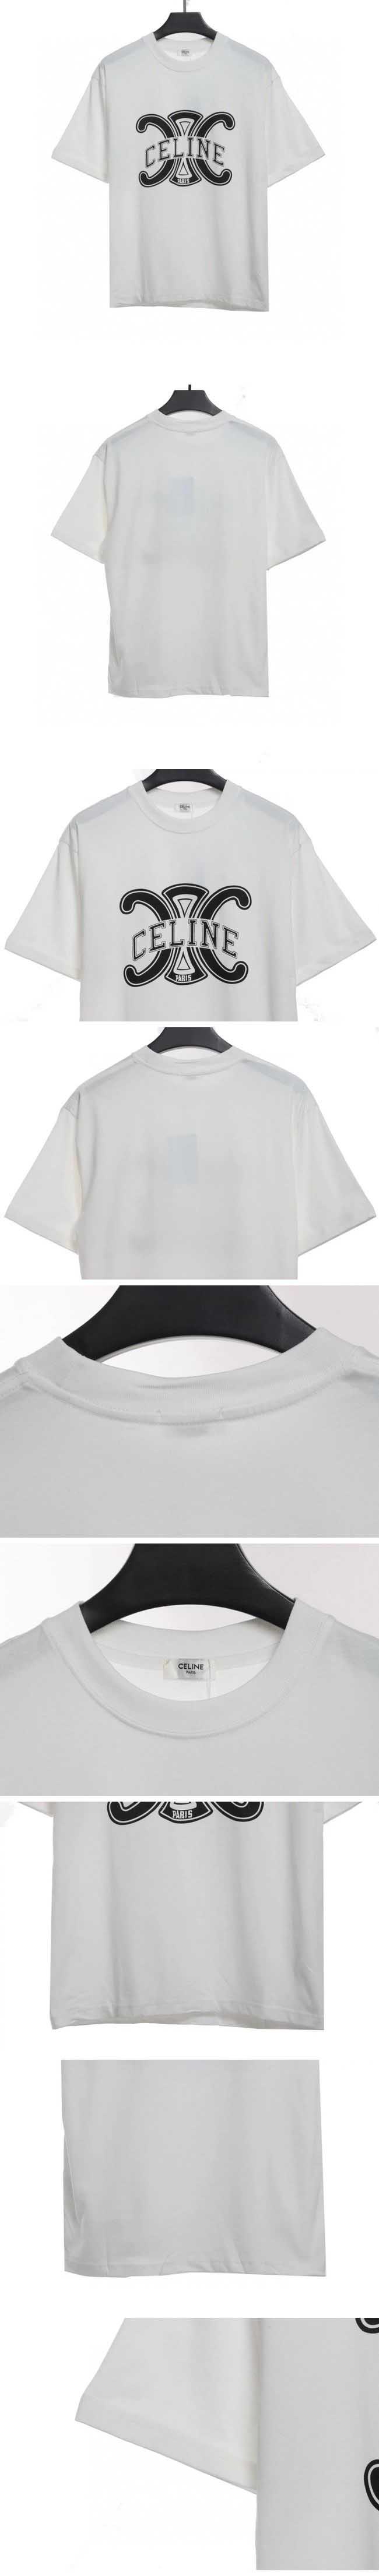 Celine Triumph Logo Tee White セリーヌ トリンフ ロゴ Tシャツ ホワイト